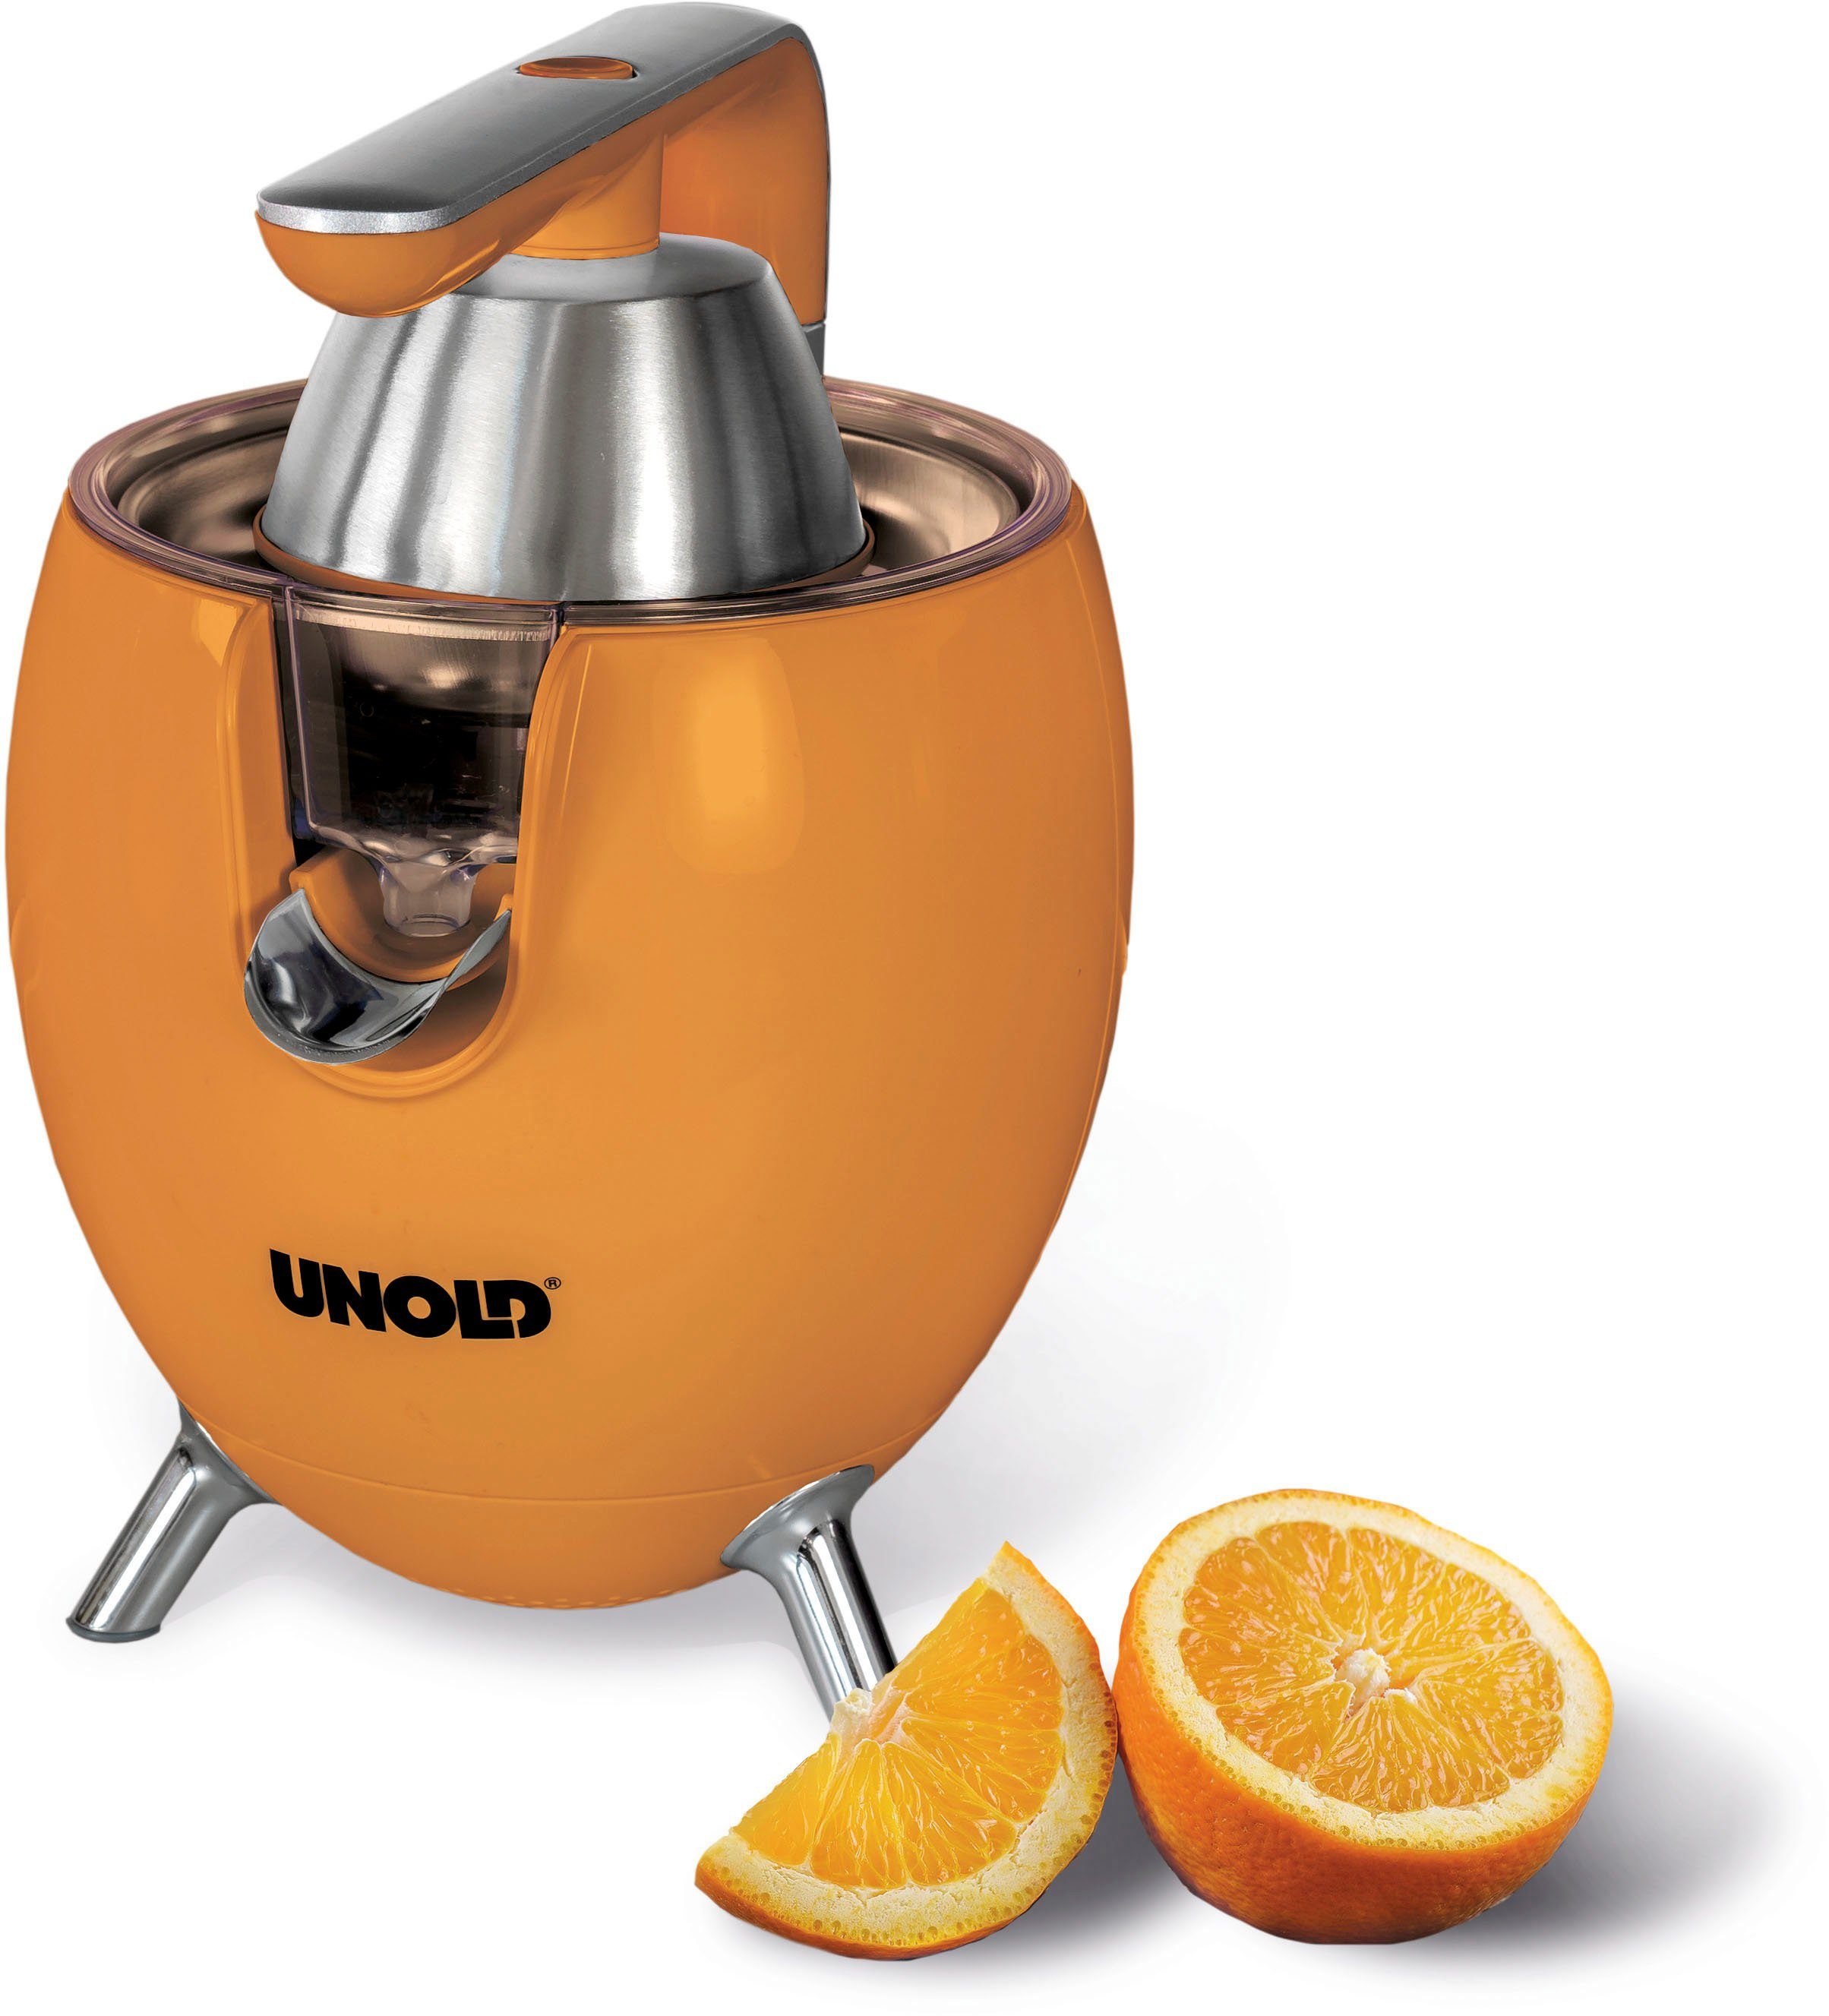 Unold Zitruspresse 78133 Power Juicy Orange, 300 W